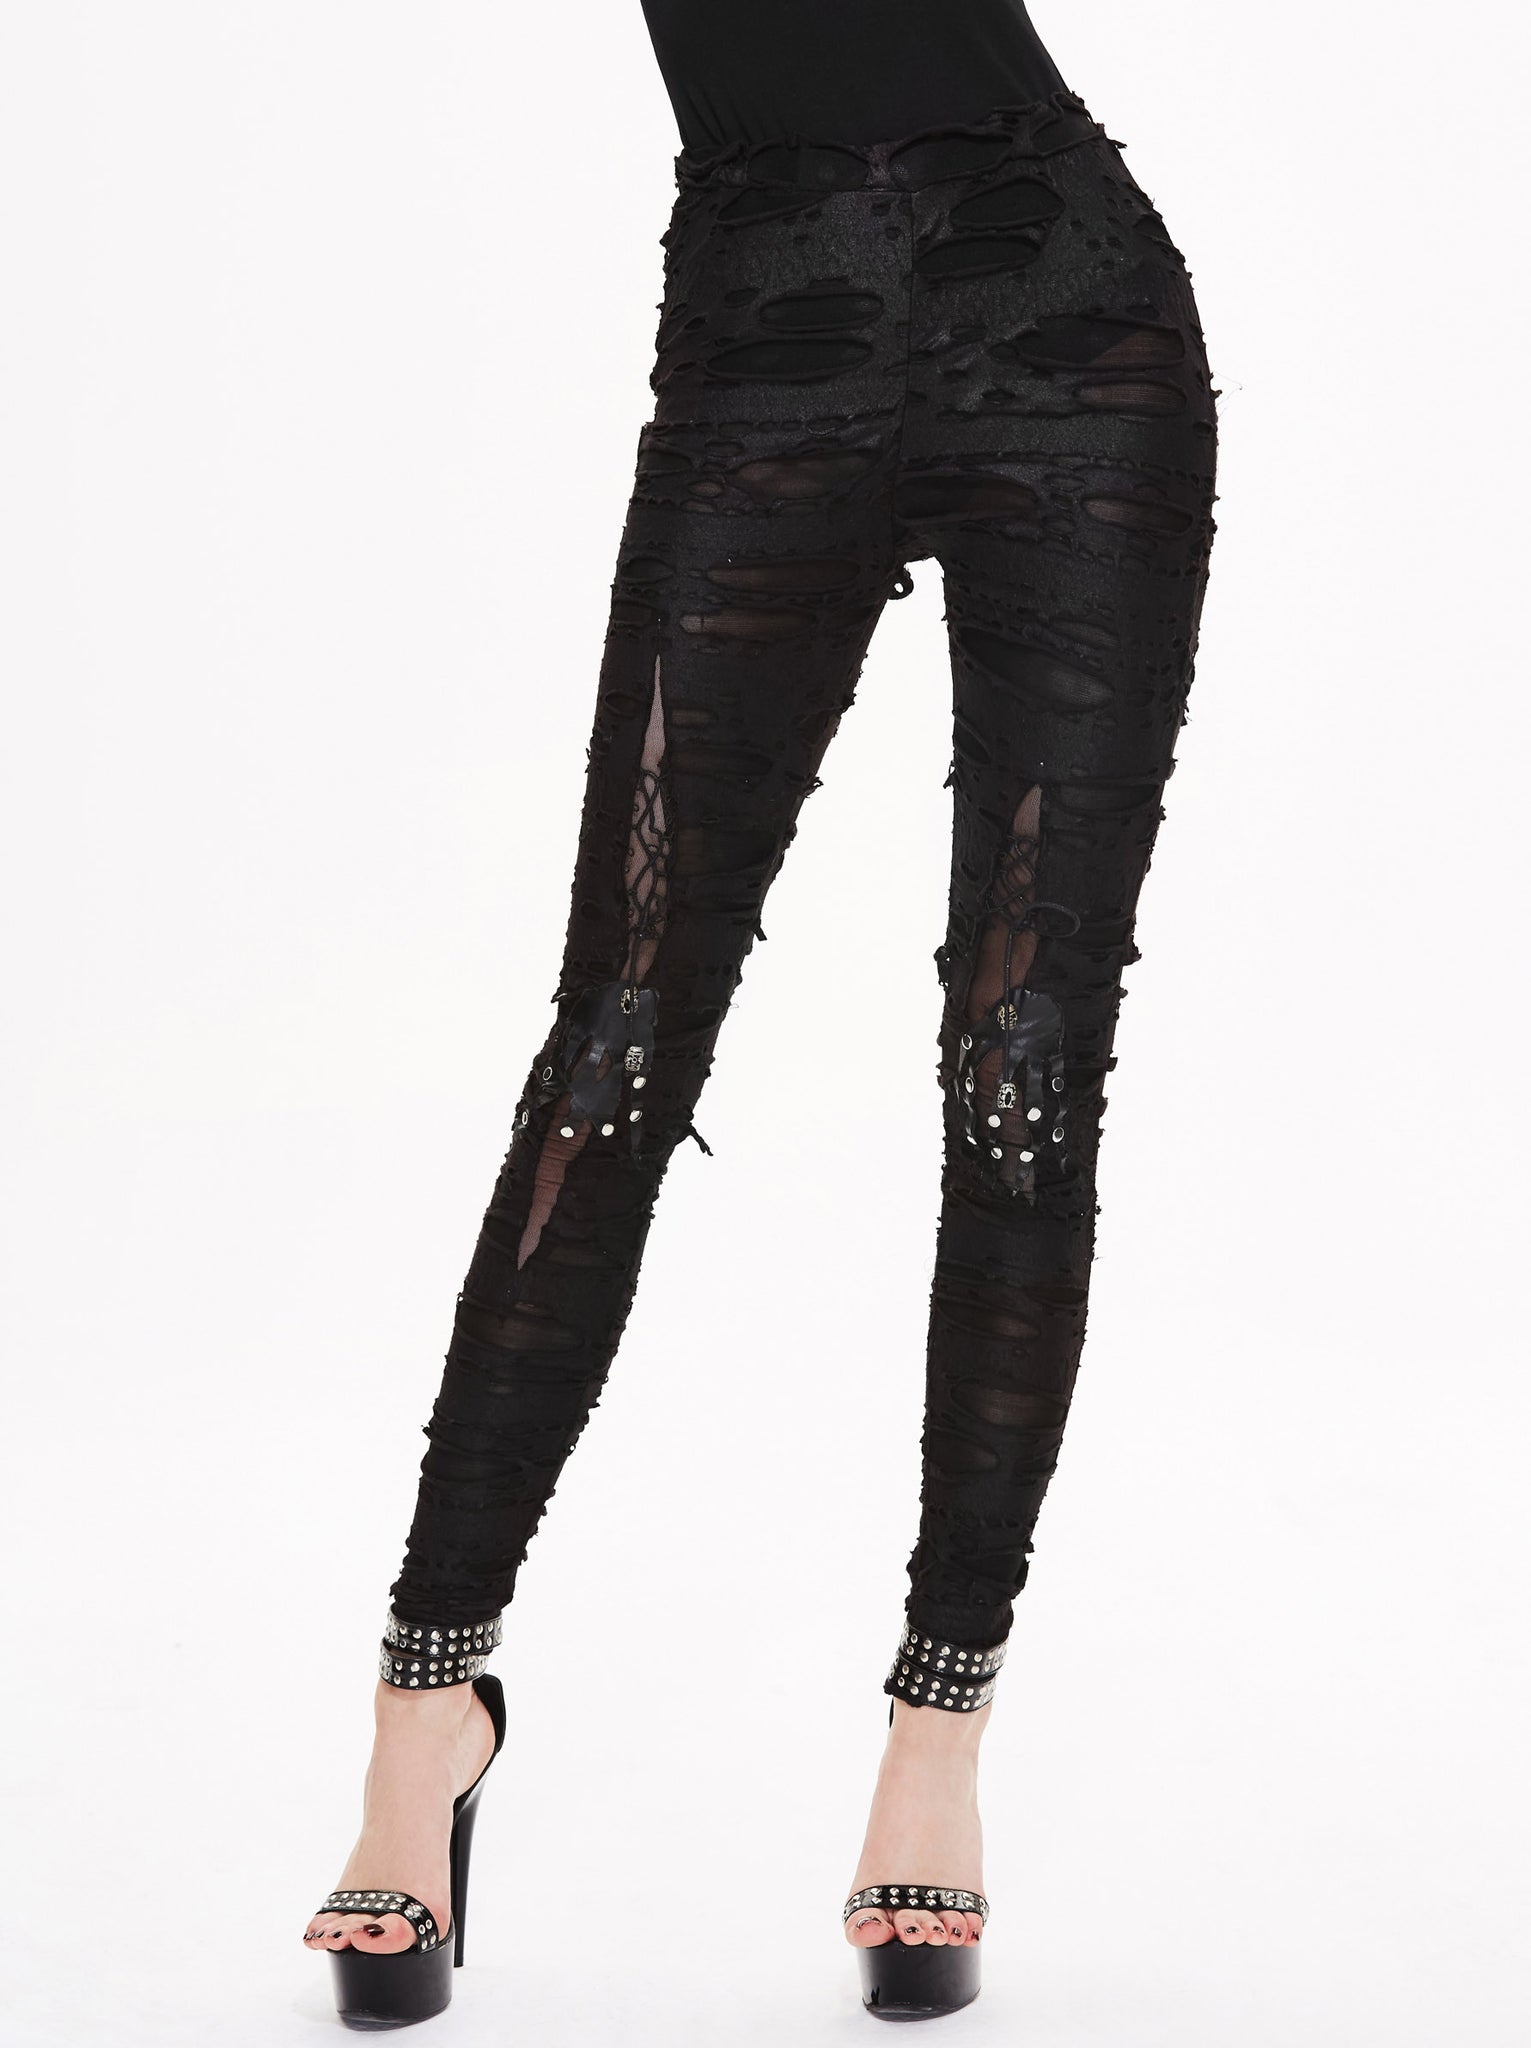 Zombie Kiss Shredded Leggings by Devil Fashion – The Dark Side of Fashion